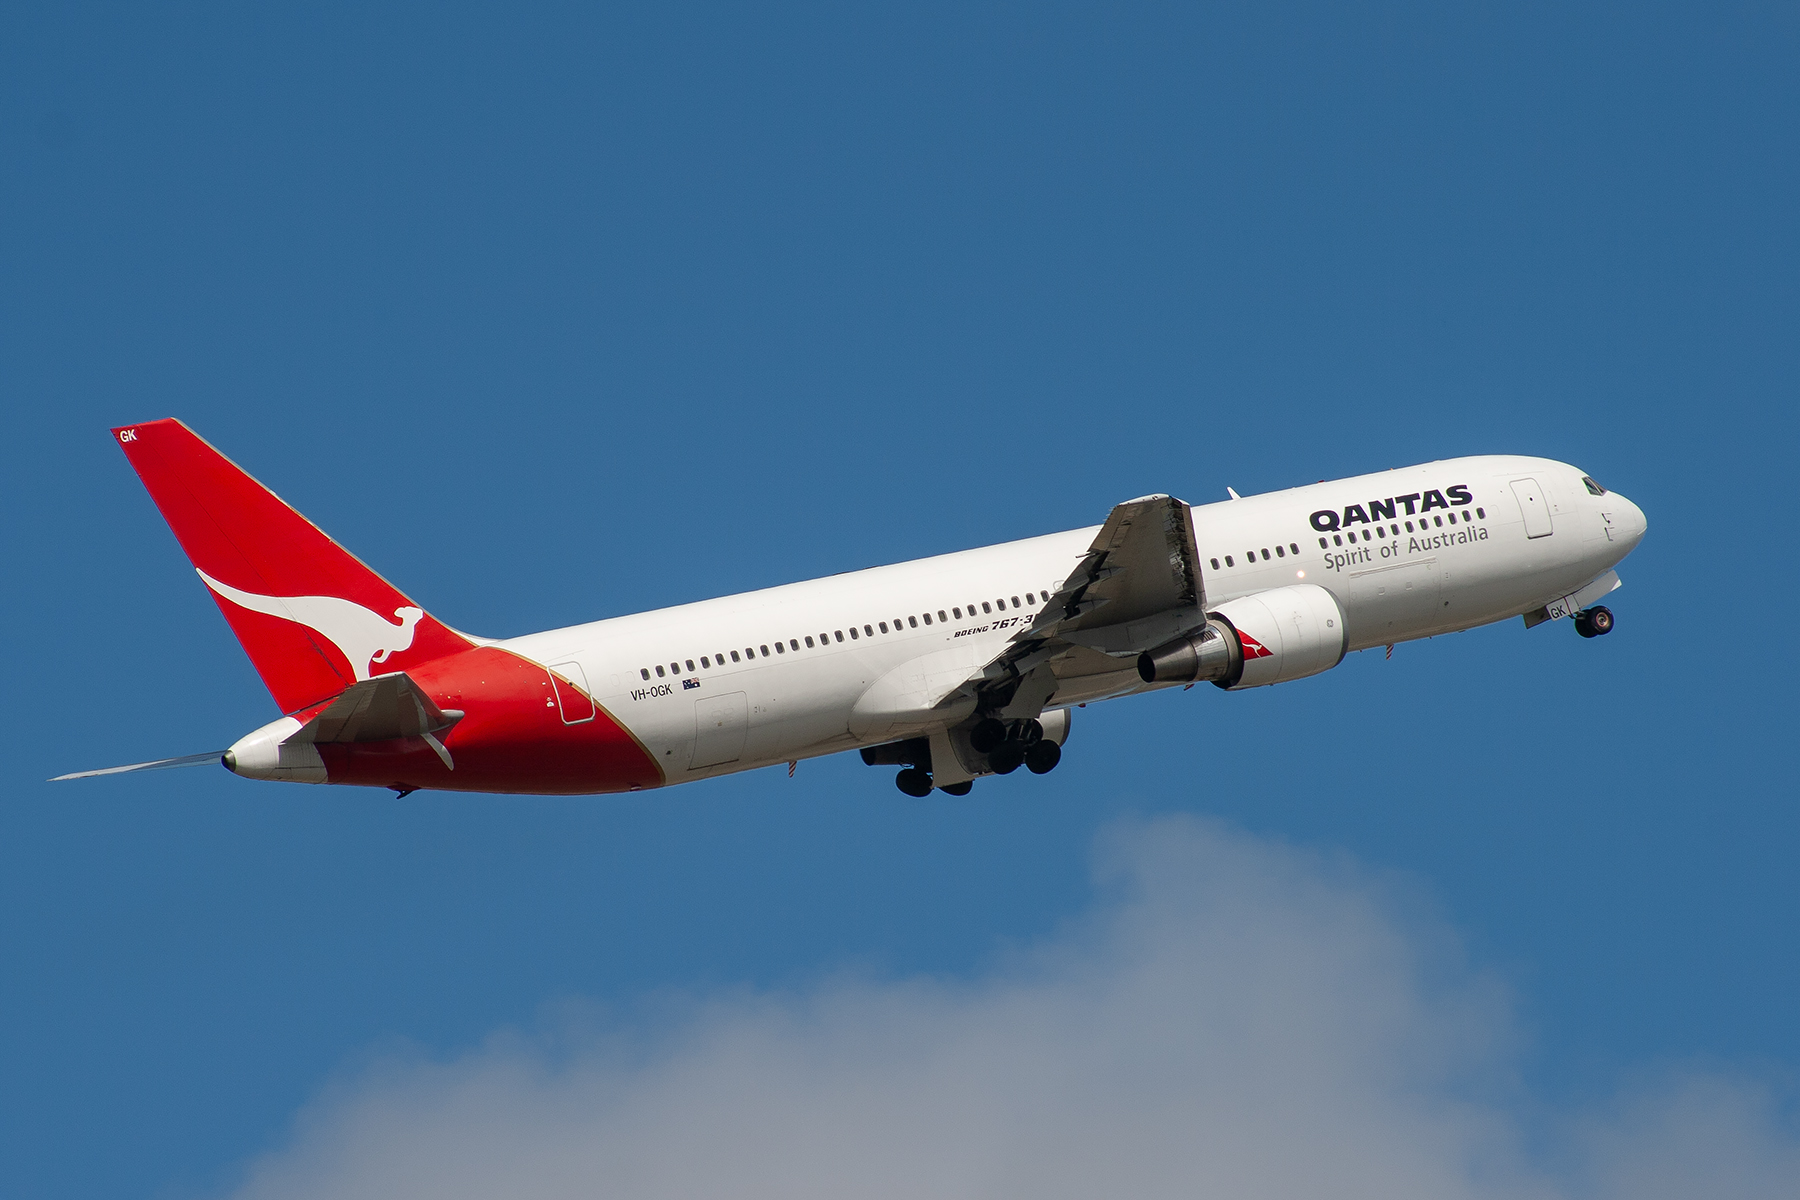 Qantas Boeing 767-300ER VH-OGK at Kingsford Smith